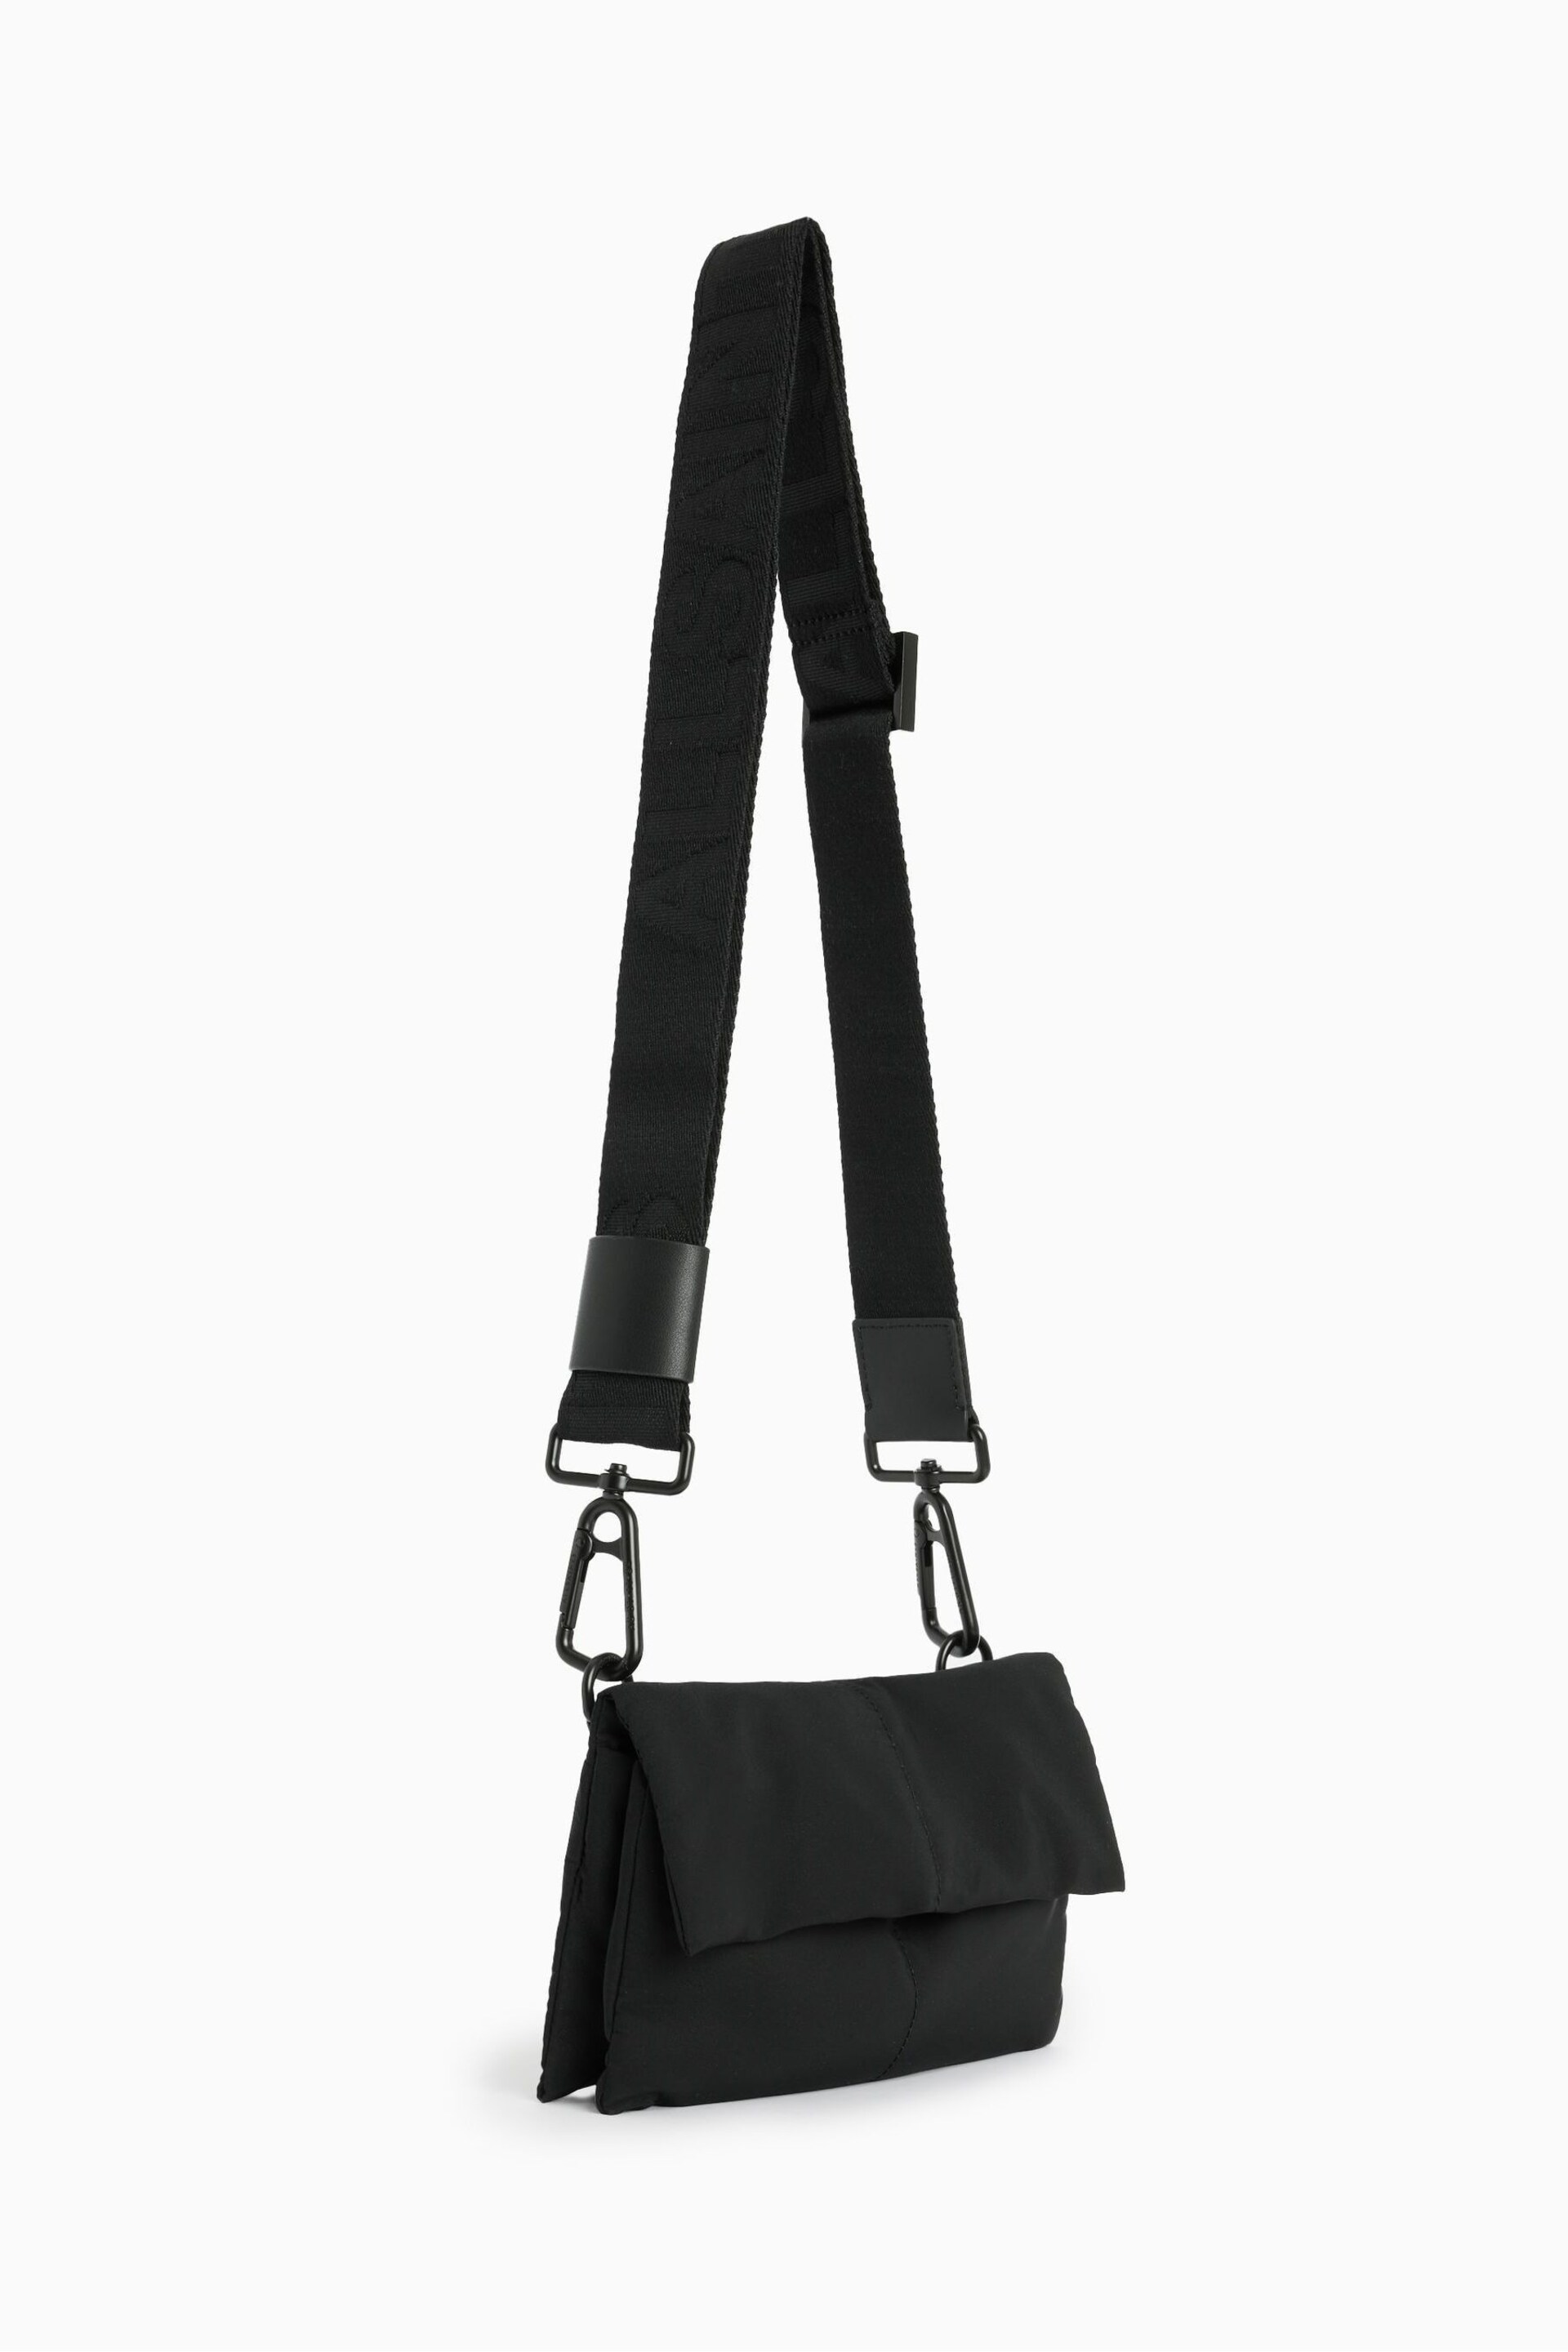 AllSaints Black Nylon Ezra Bag - Image 5 of 8